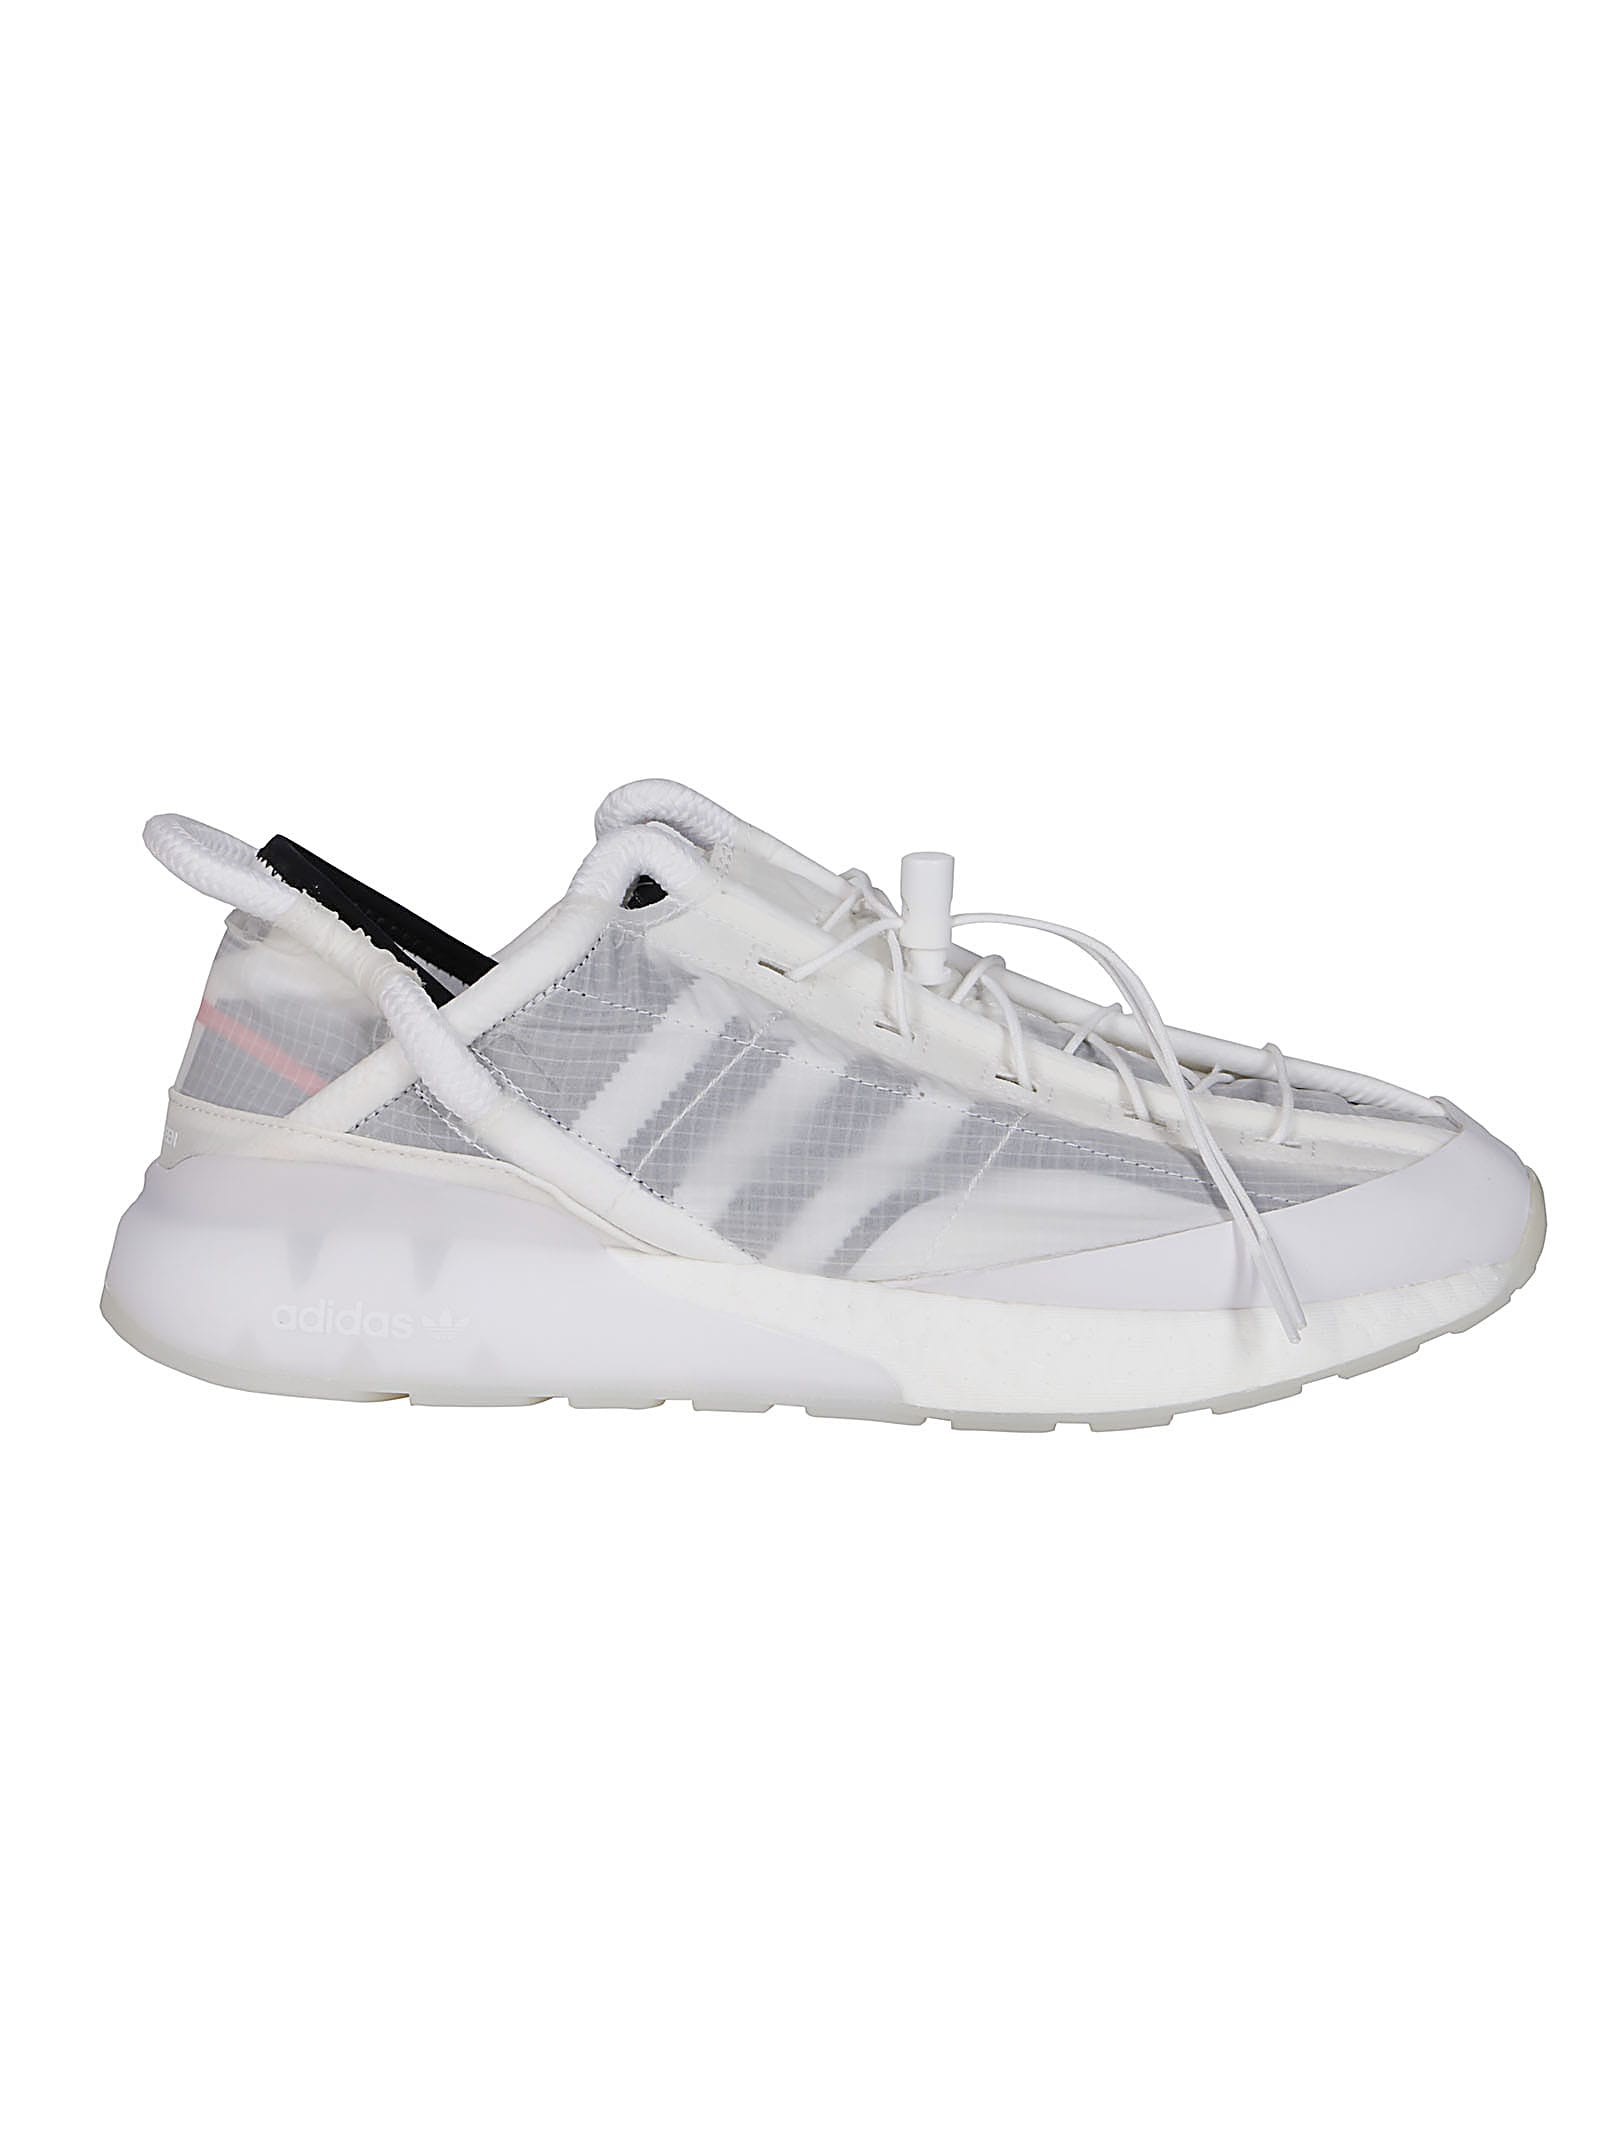 Adidas Originals White And Grey Nylon Zx 2k Phormar Sneakers